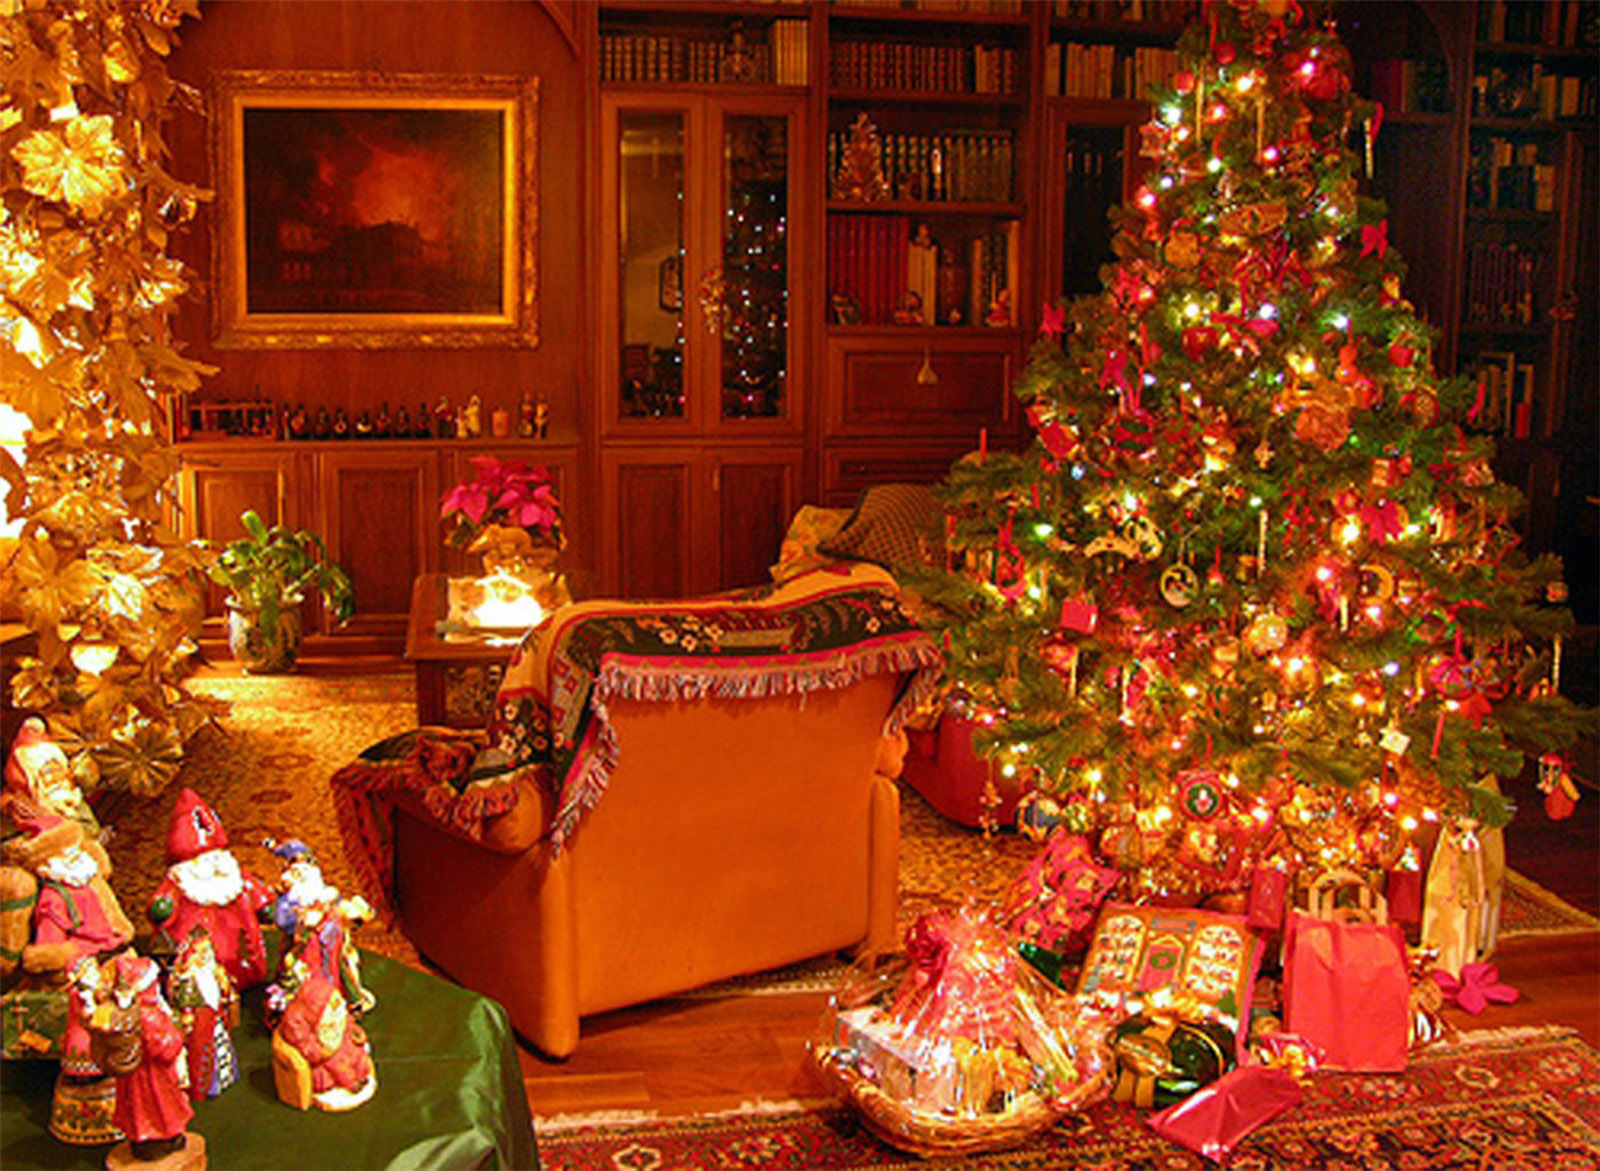 New Year desktop wallpapers, Christmas tree, download photo, car wallpaper